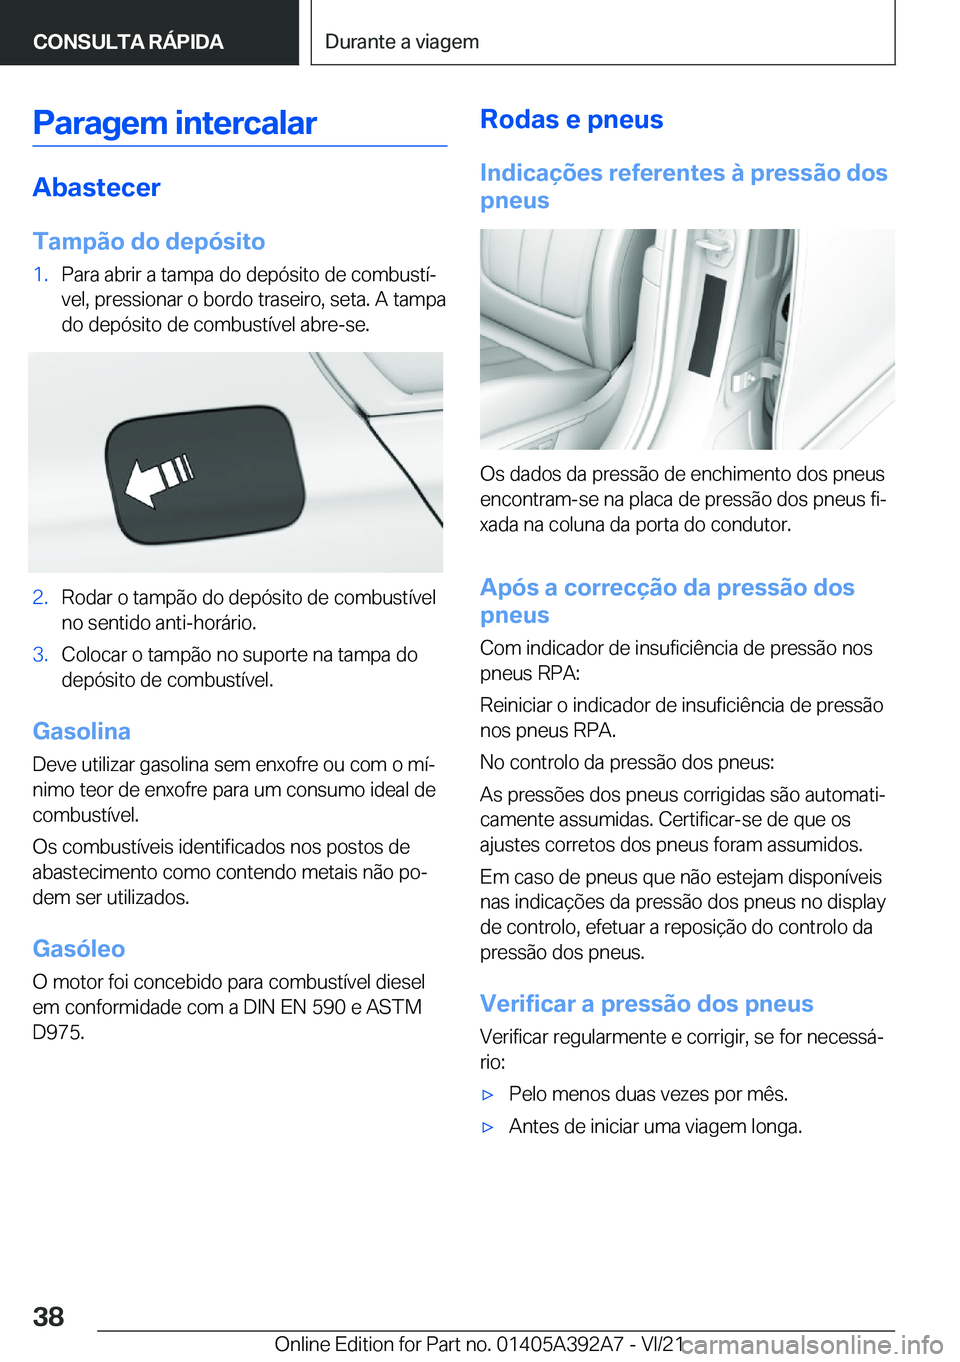 BMW 4 SERIES 2022  Manual do condutor (in Portuguese) �P�a�r�a�g�e�m��i�n�t�e�r�c�a�l�a�r
�A�b�a�s�t�e�c�e�r
�T�a�m�p�ã�o��d�o��d�e�p�